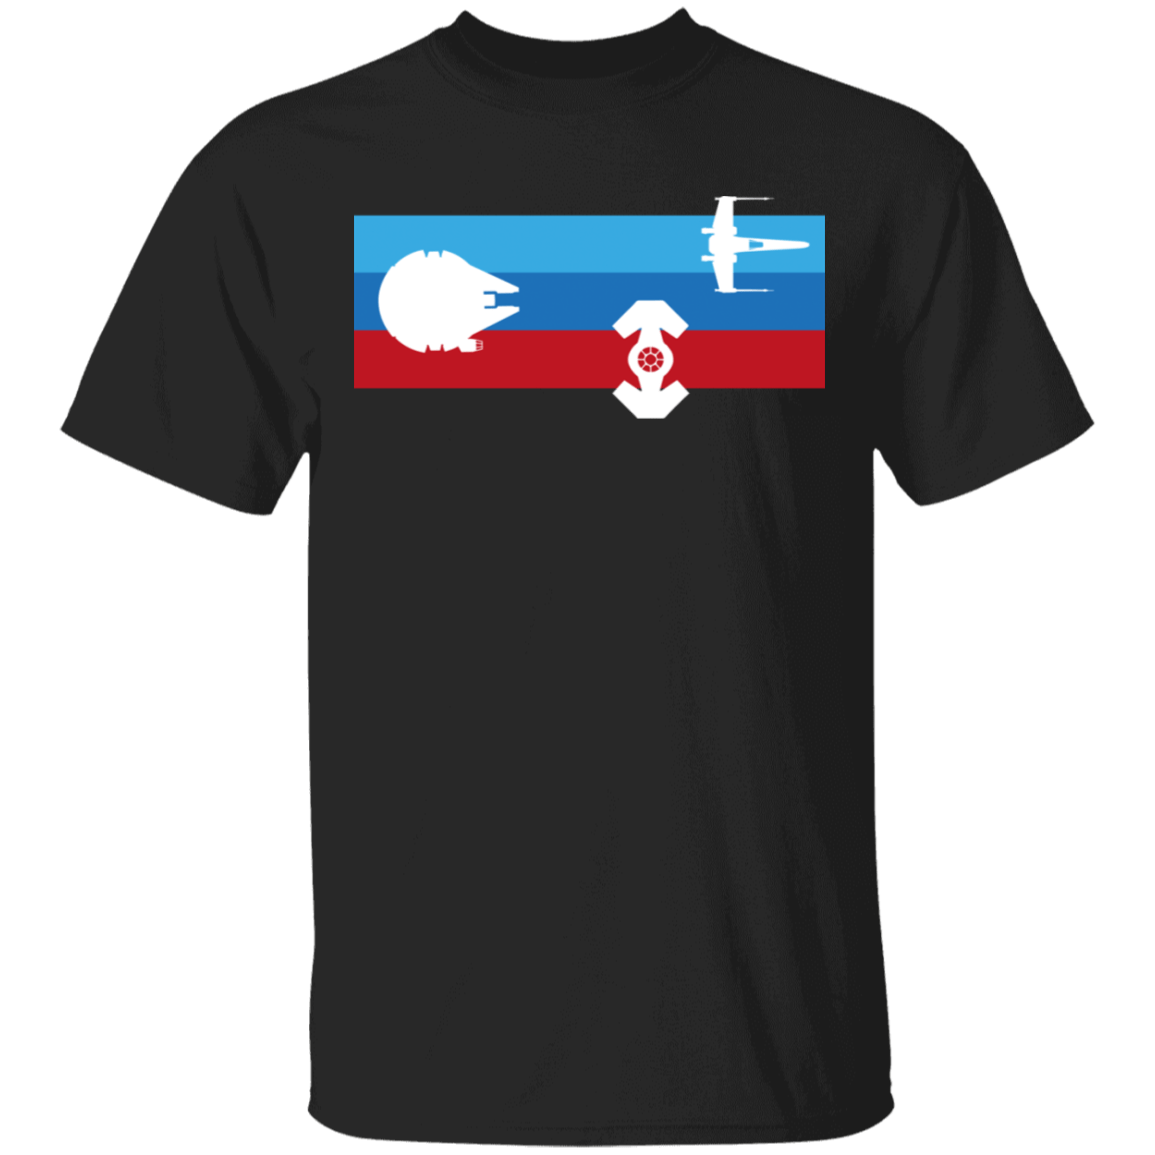 T-Shirts Black / S Minimalist Spaceships T-Shirt